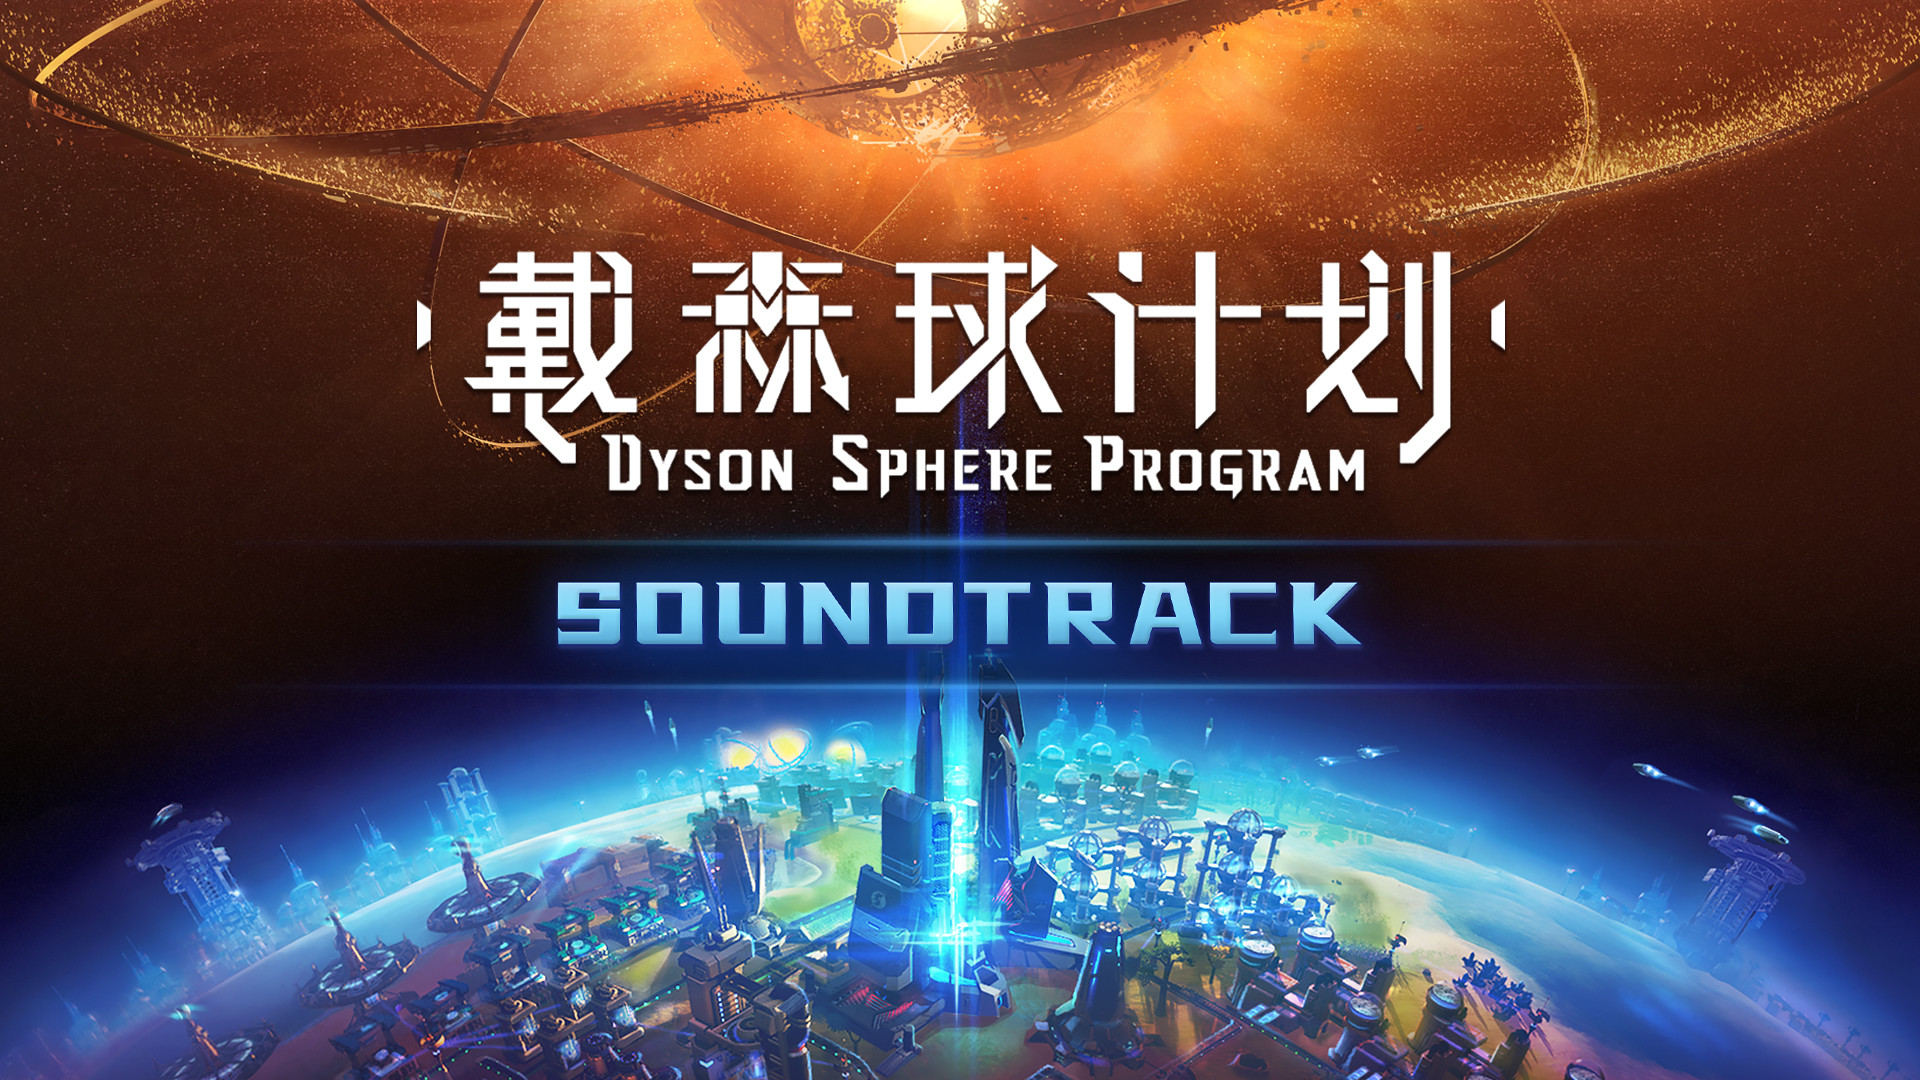 Dyson Sphere Program - Soundtrack Featured Screenshot #1